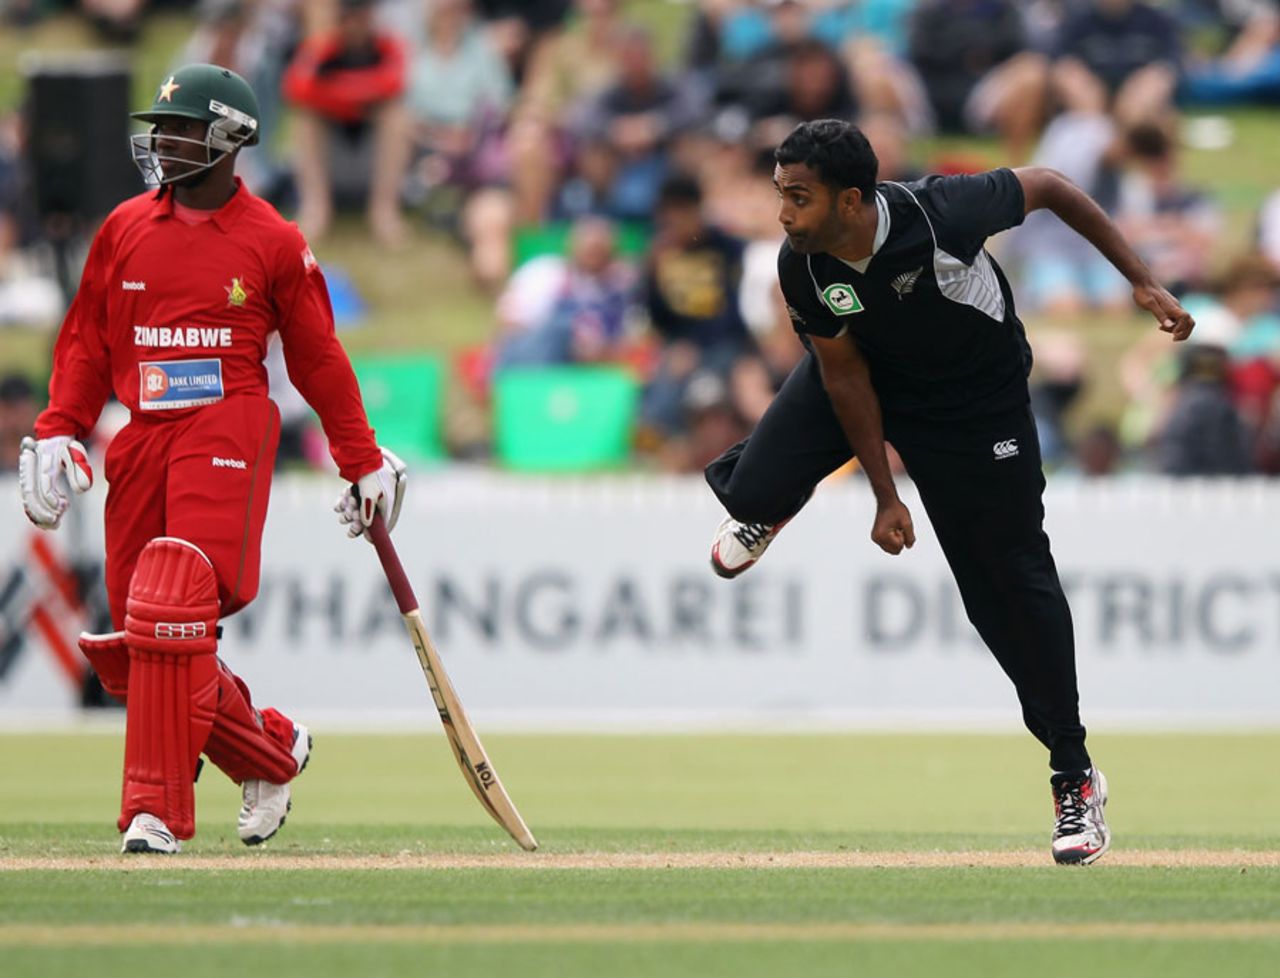 Tarun Nethula wheels away on debut, New Zealand v Zimbabwe, 2nd ODI, Whangarei, February 6, 2012